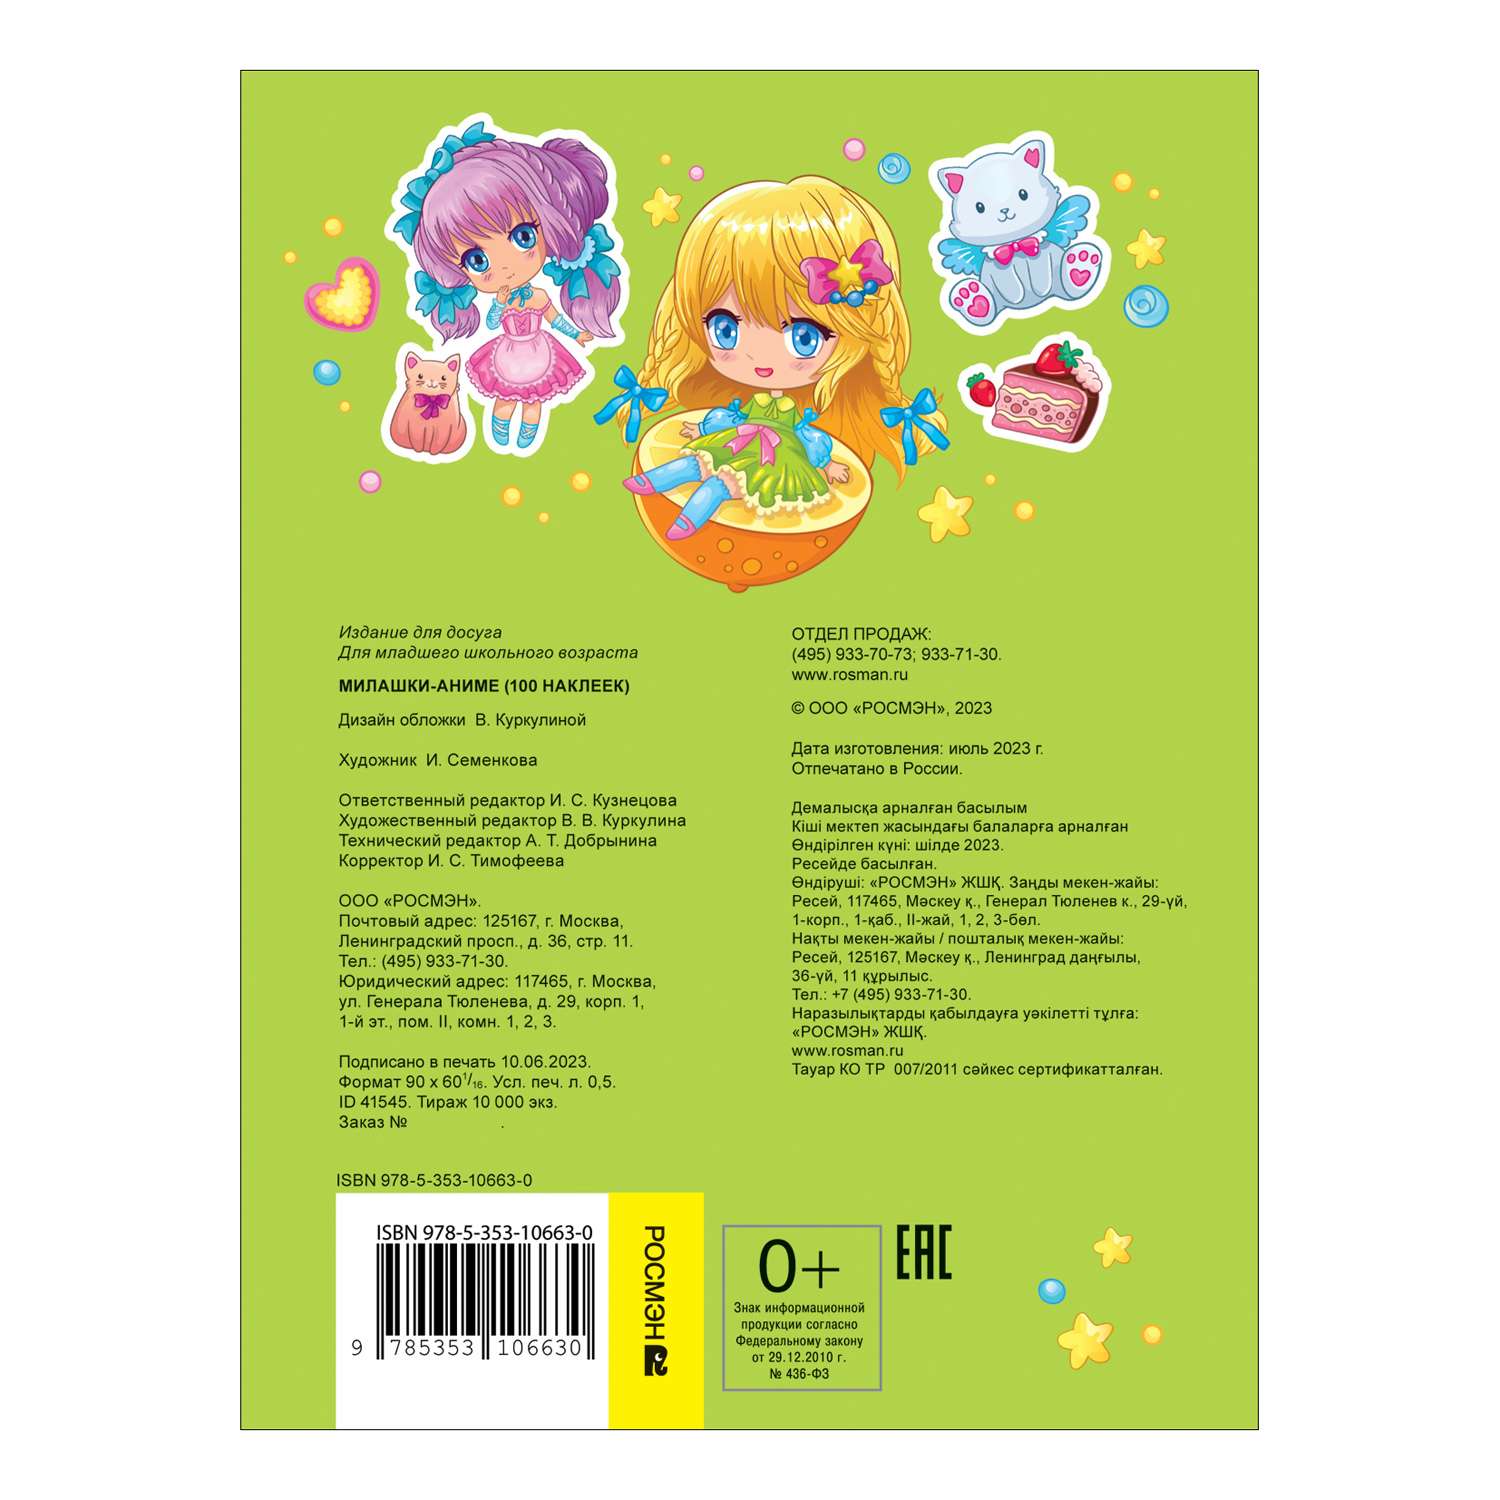 Альбом наклеек Милашки аниме 100 наклеек - фото 2